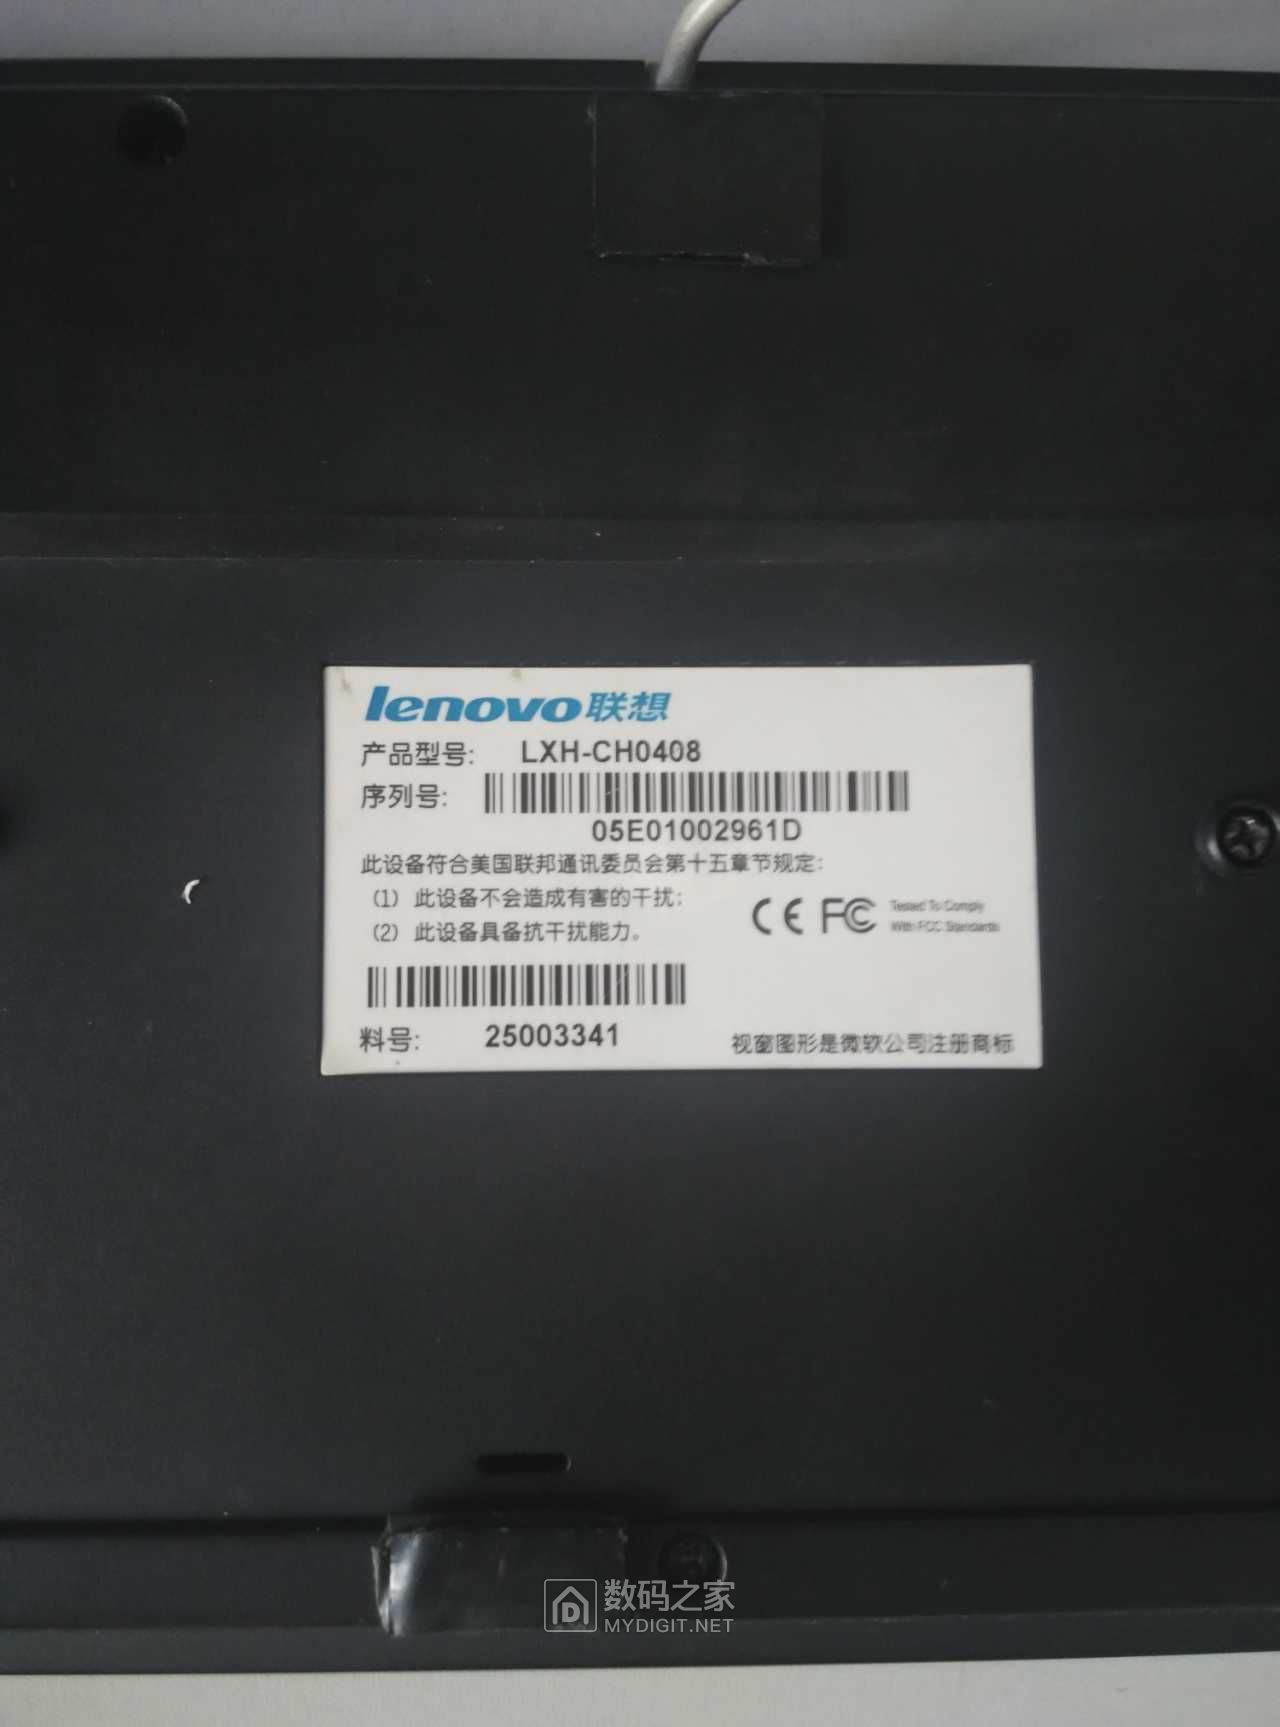 Lenovo LXH-CH0408